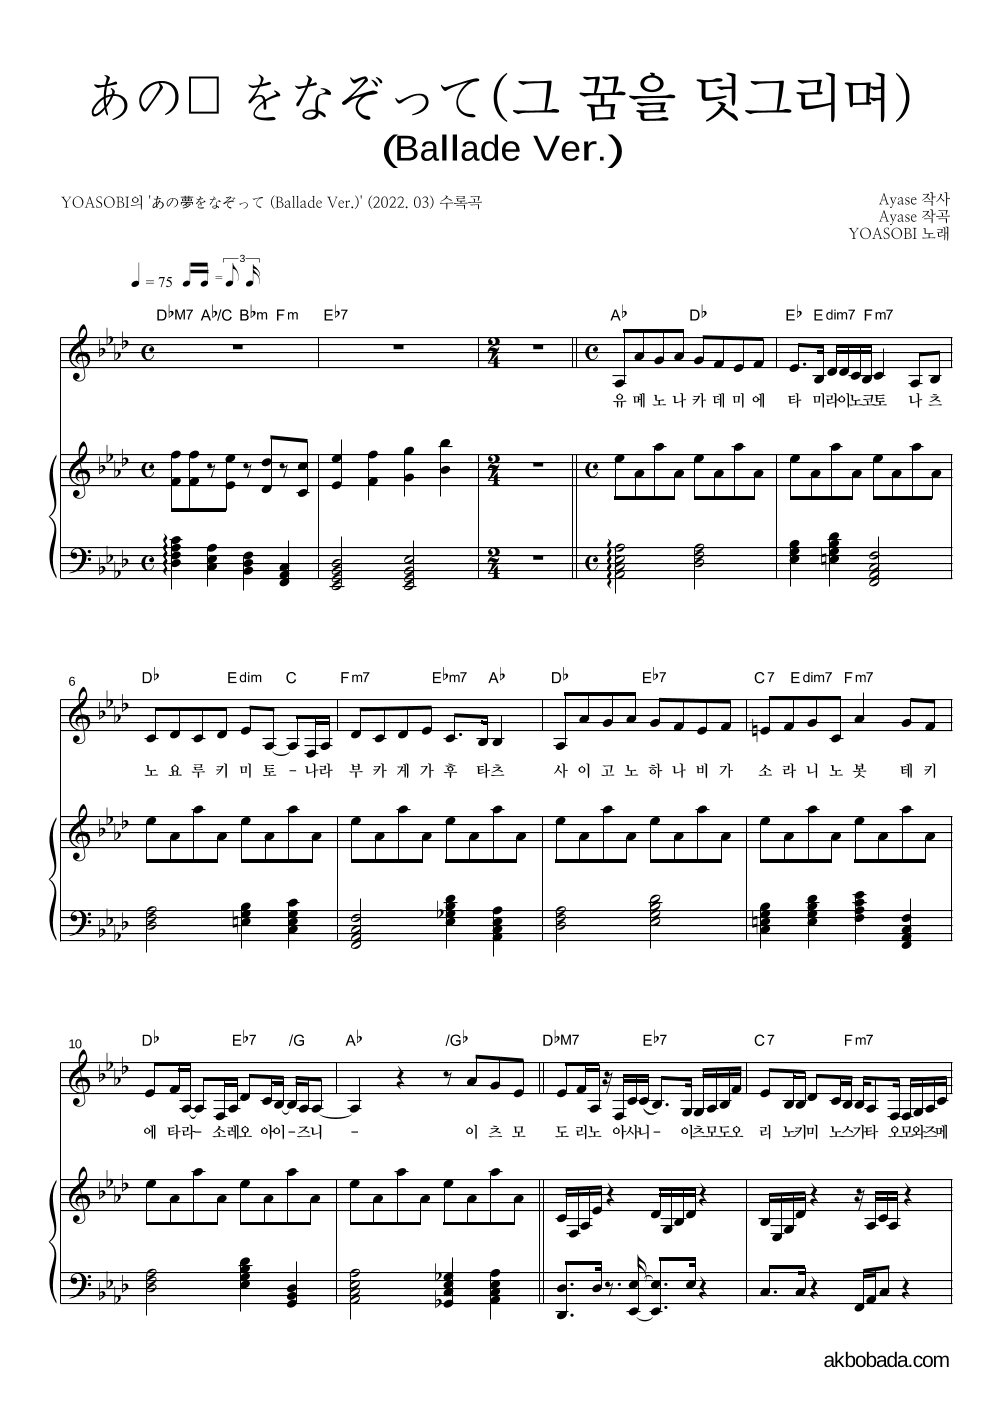 YOASOBI - あの夢をなぞって(그 꿈을 덧그리며)(Ballade Ver.) 피아노 3단 악보 